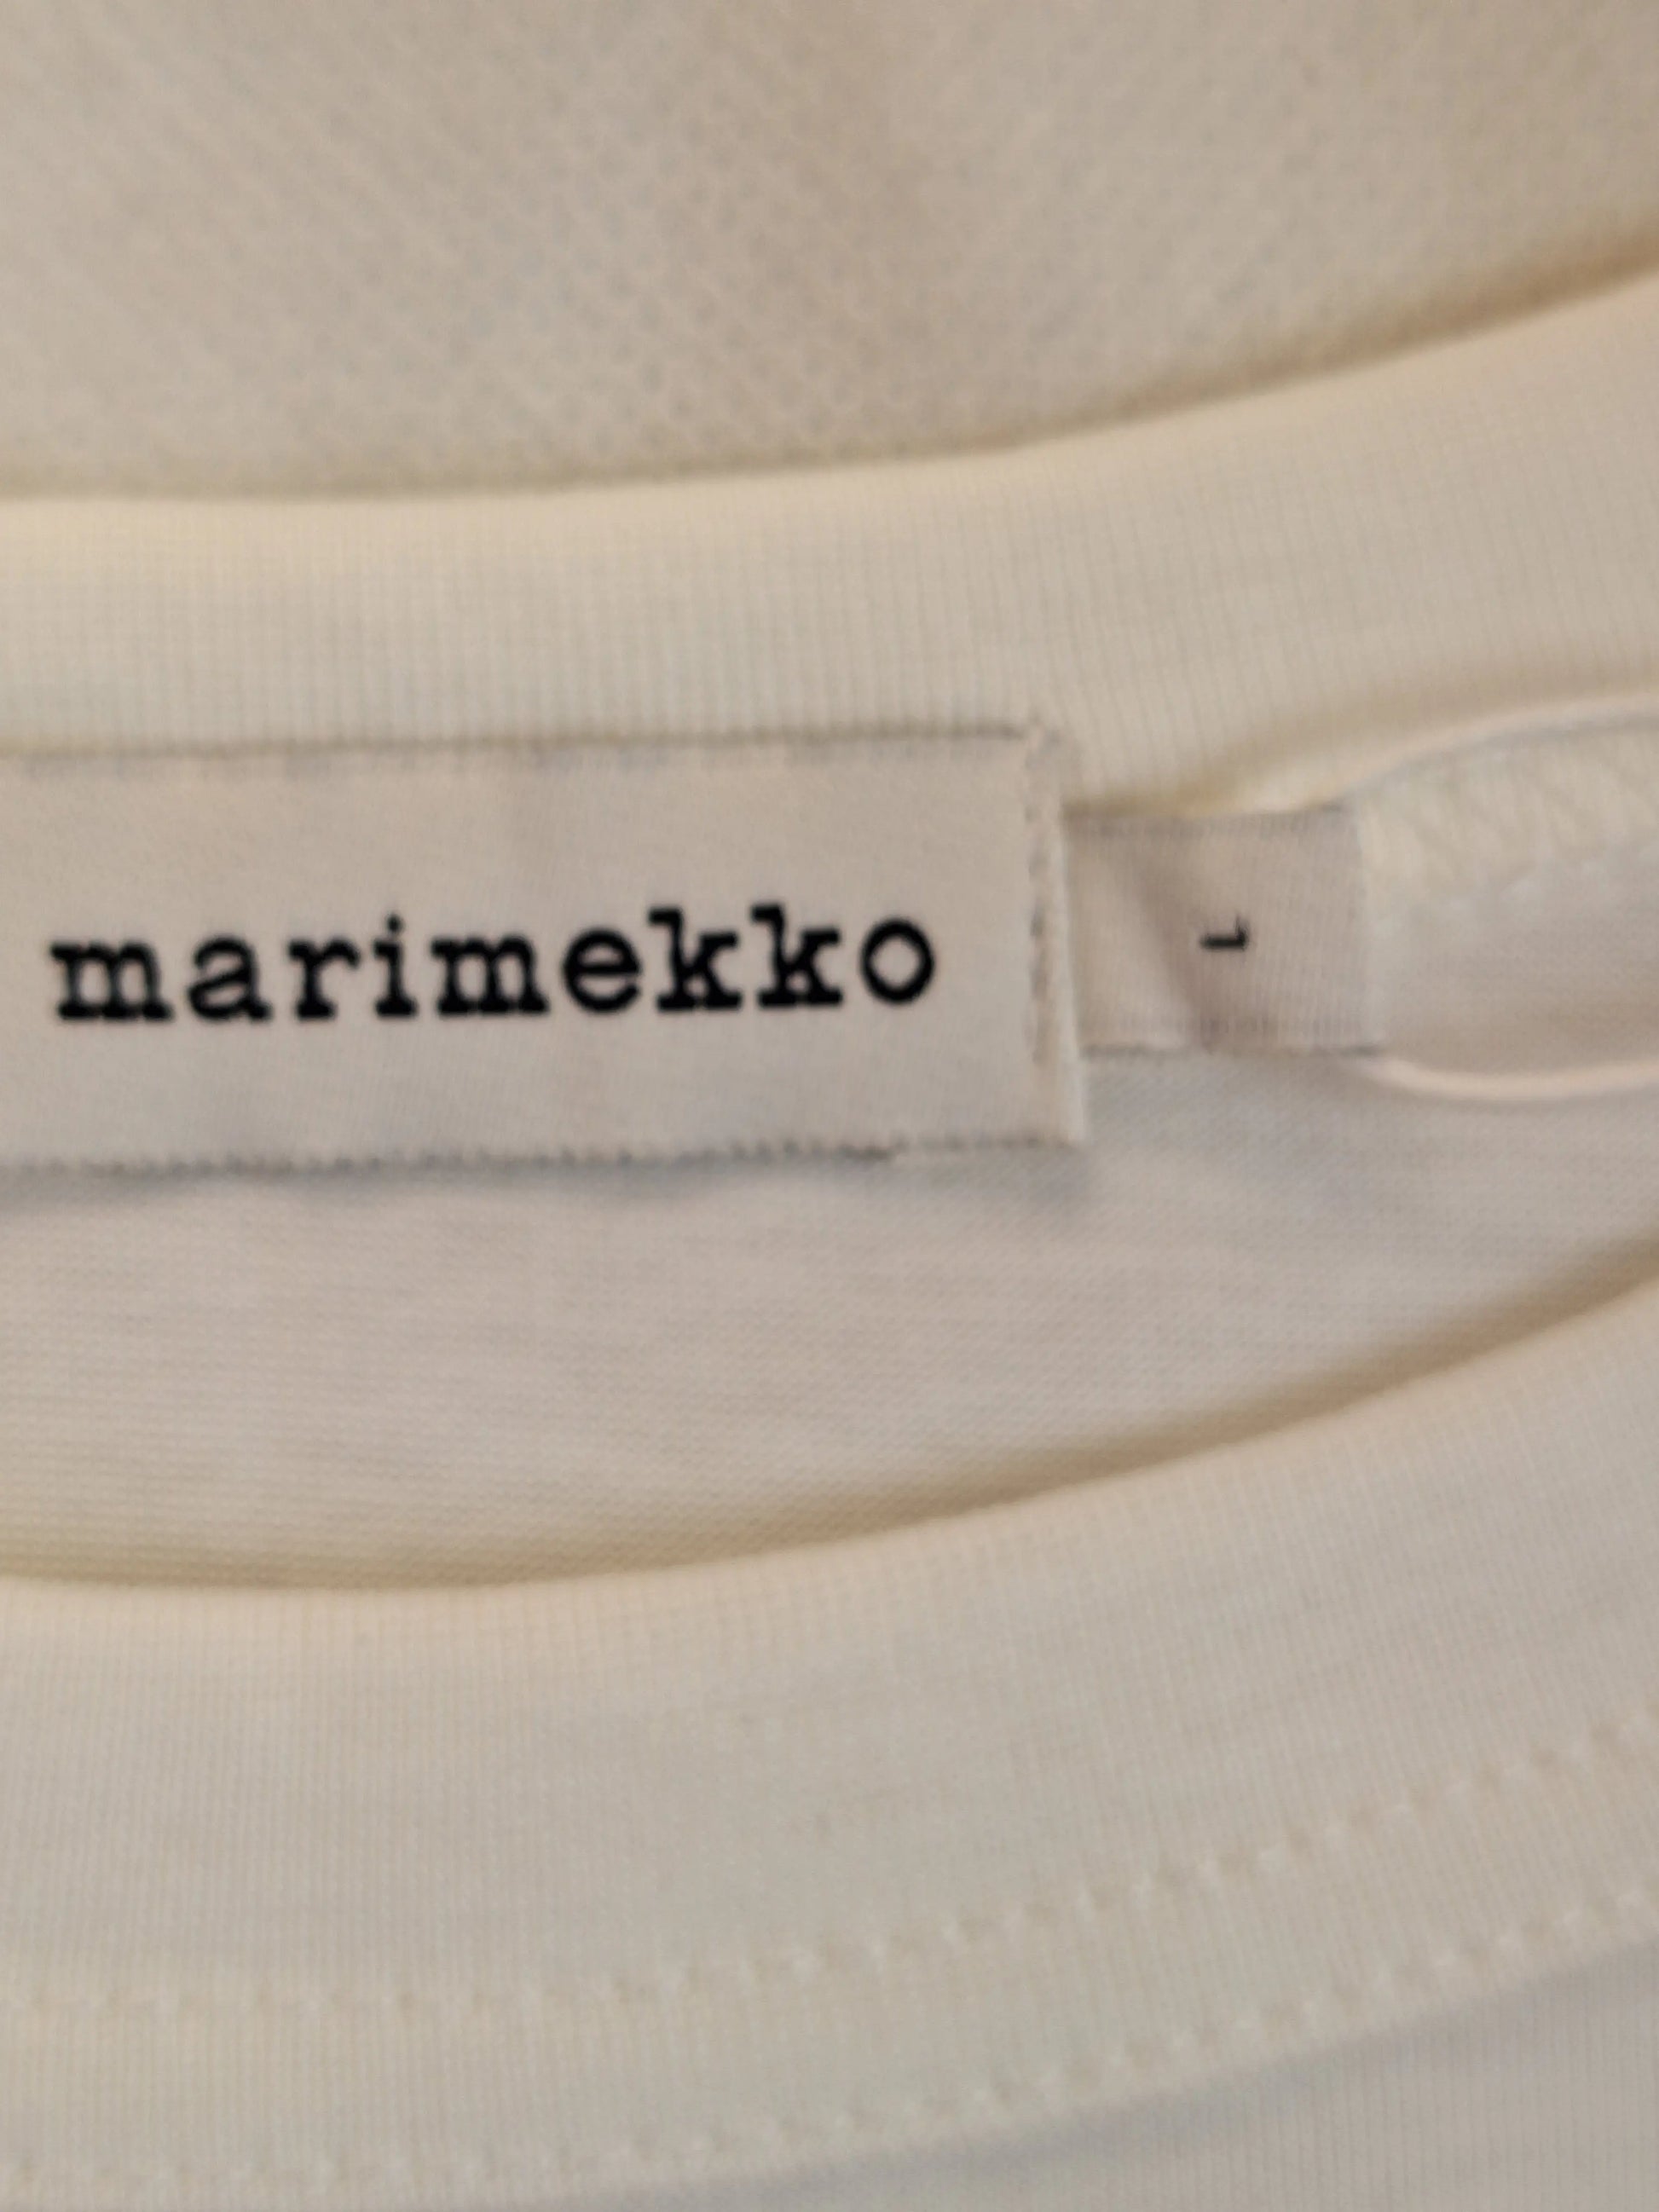 Marimekko Kapina Unikko Flower T-shirt Size L by SwapUp-Online Second Hand Store-Online Thrift Store